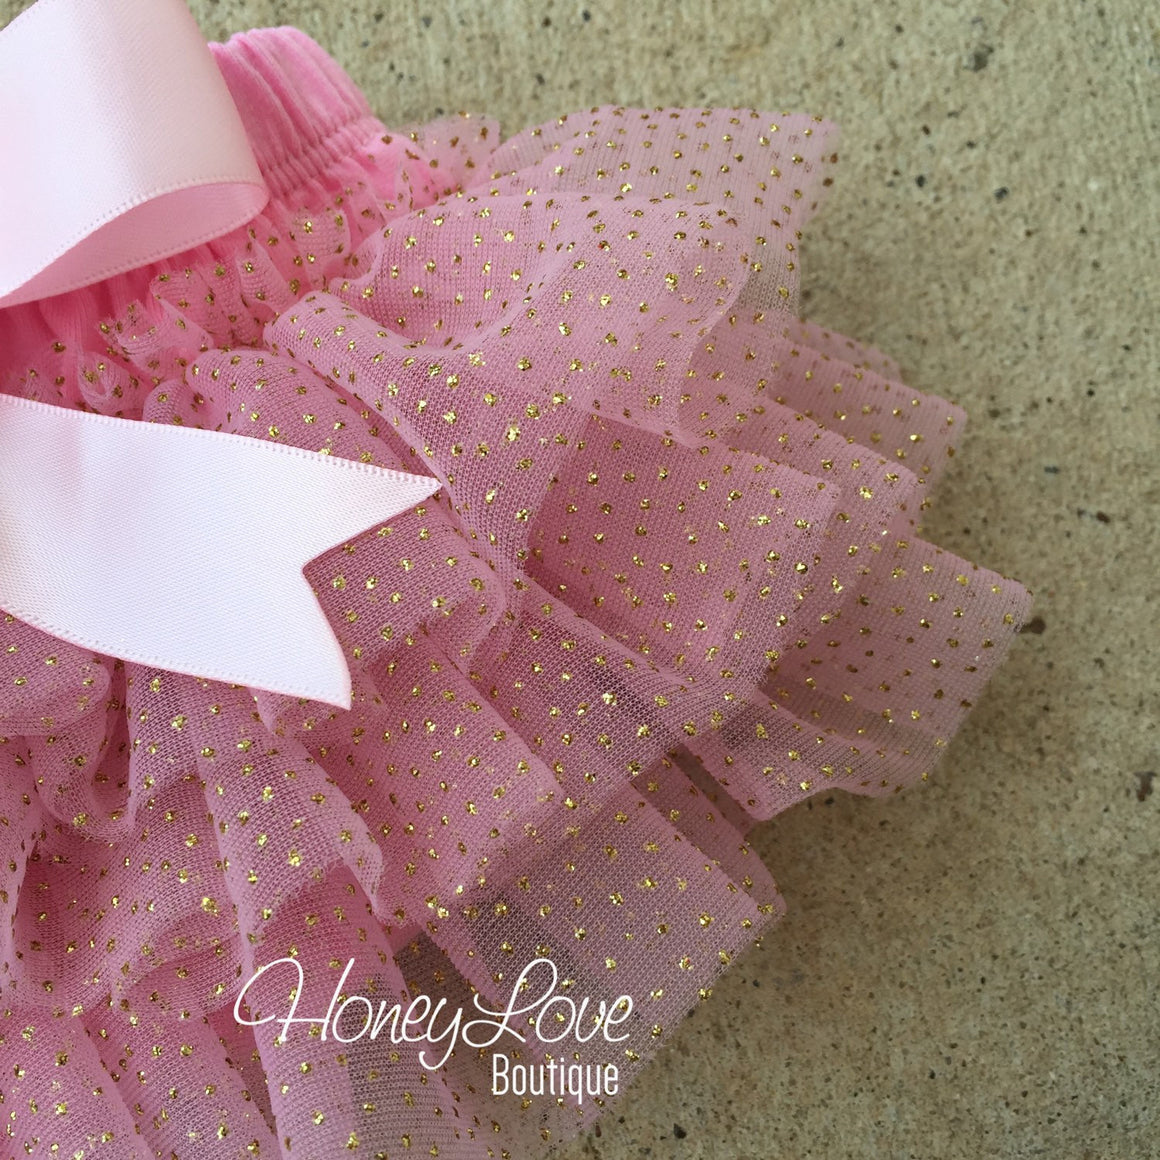 Pink with gold glitter -  tutu skirt bloomers - HoneyLoveBoutique